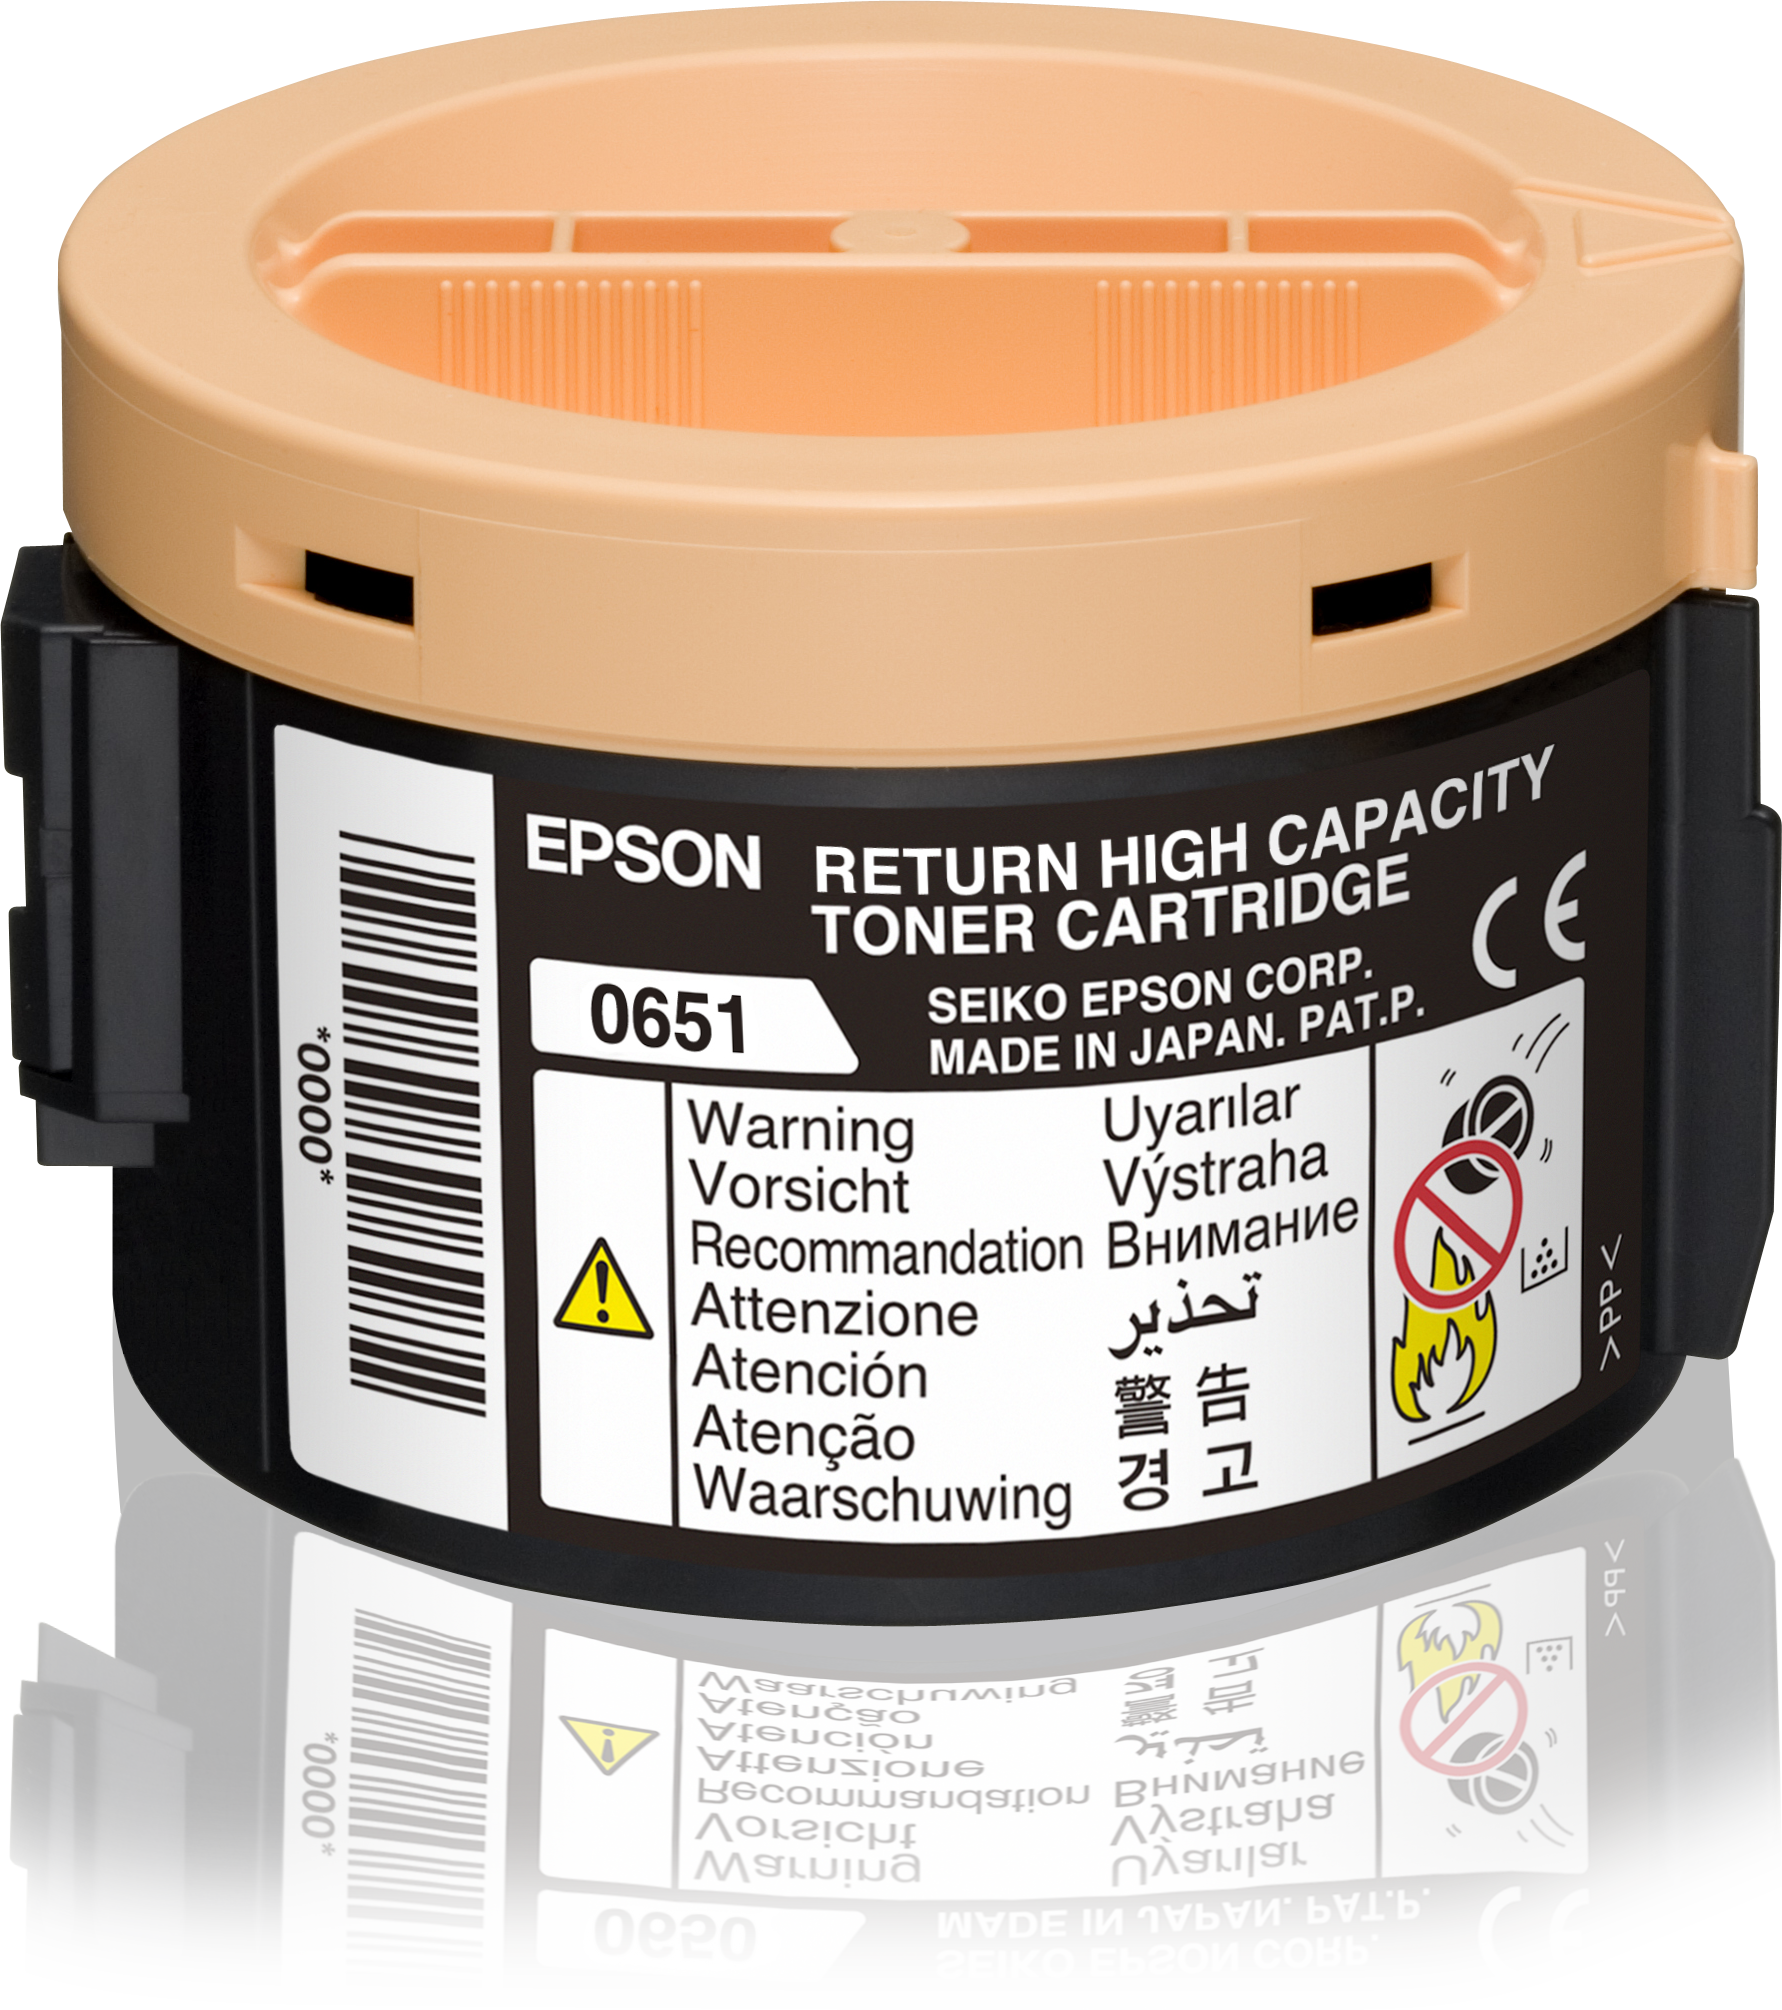 Epson Return High Capacity Toner Cartridge Black 2.2k